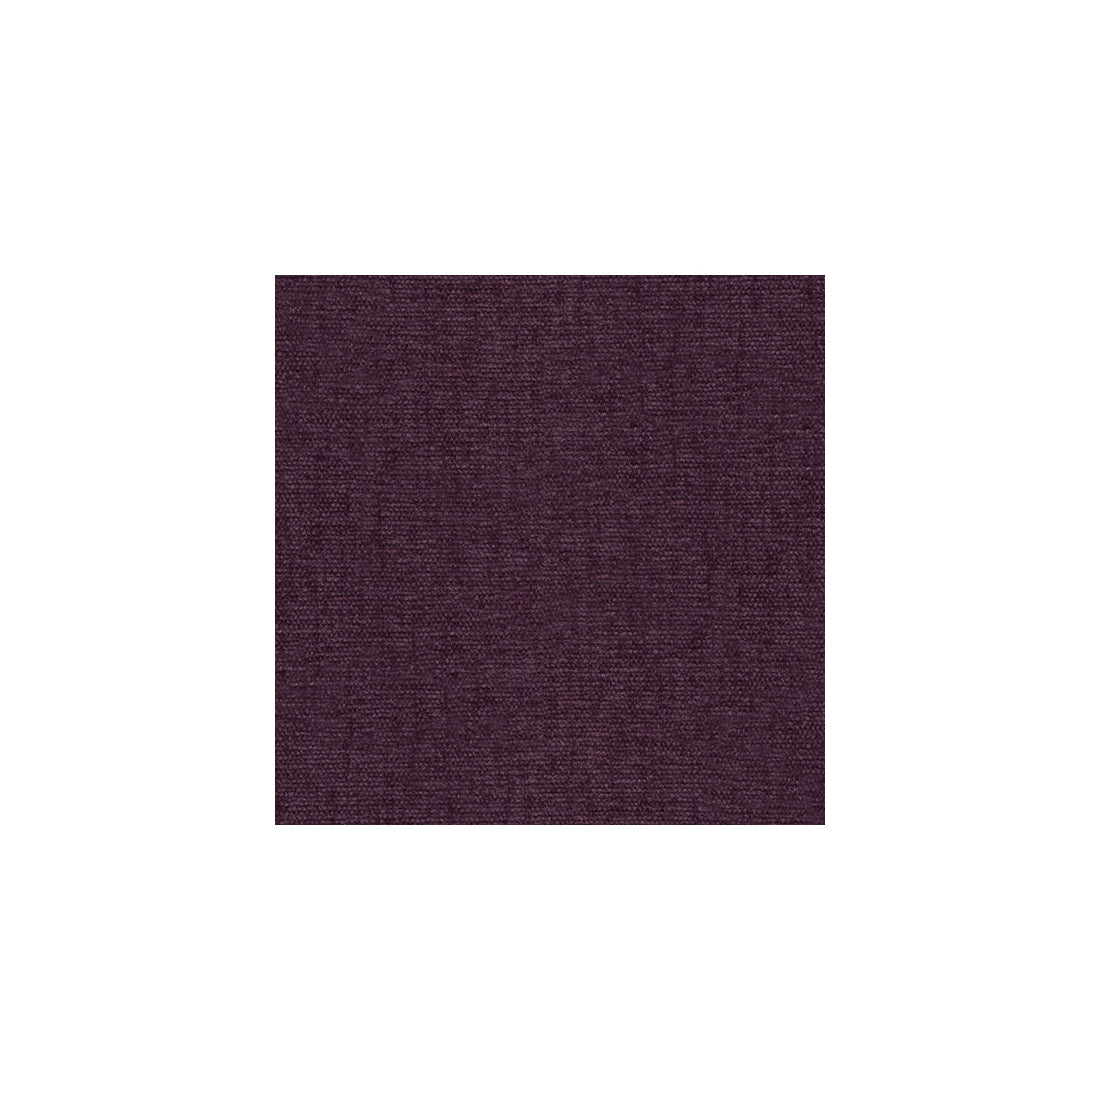 Kravet Smart fabric in 26837-1000 color - pattern 26837.1000.0 - by Kravet Smart